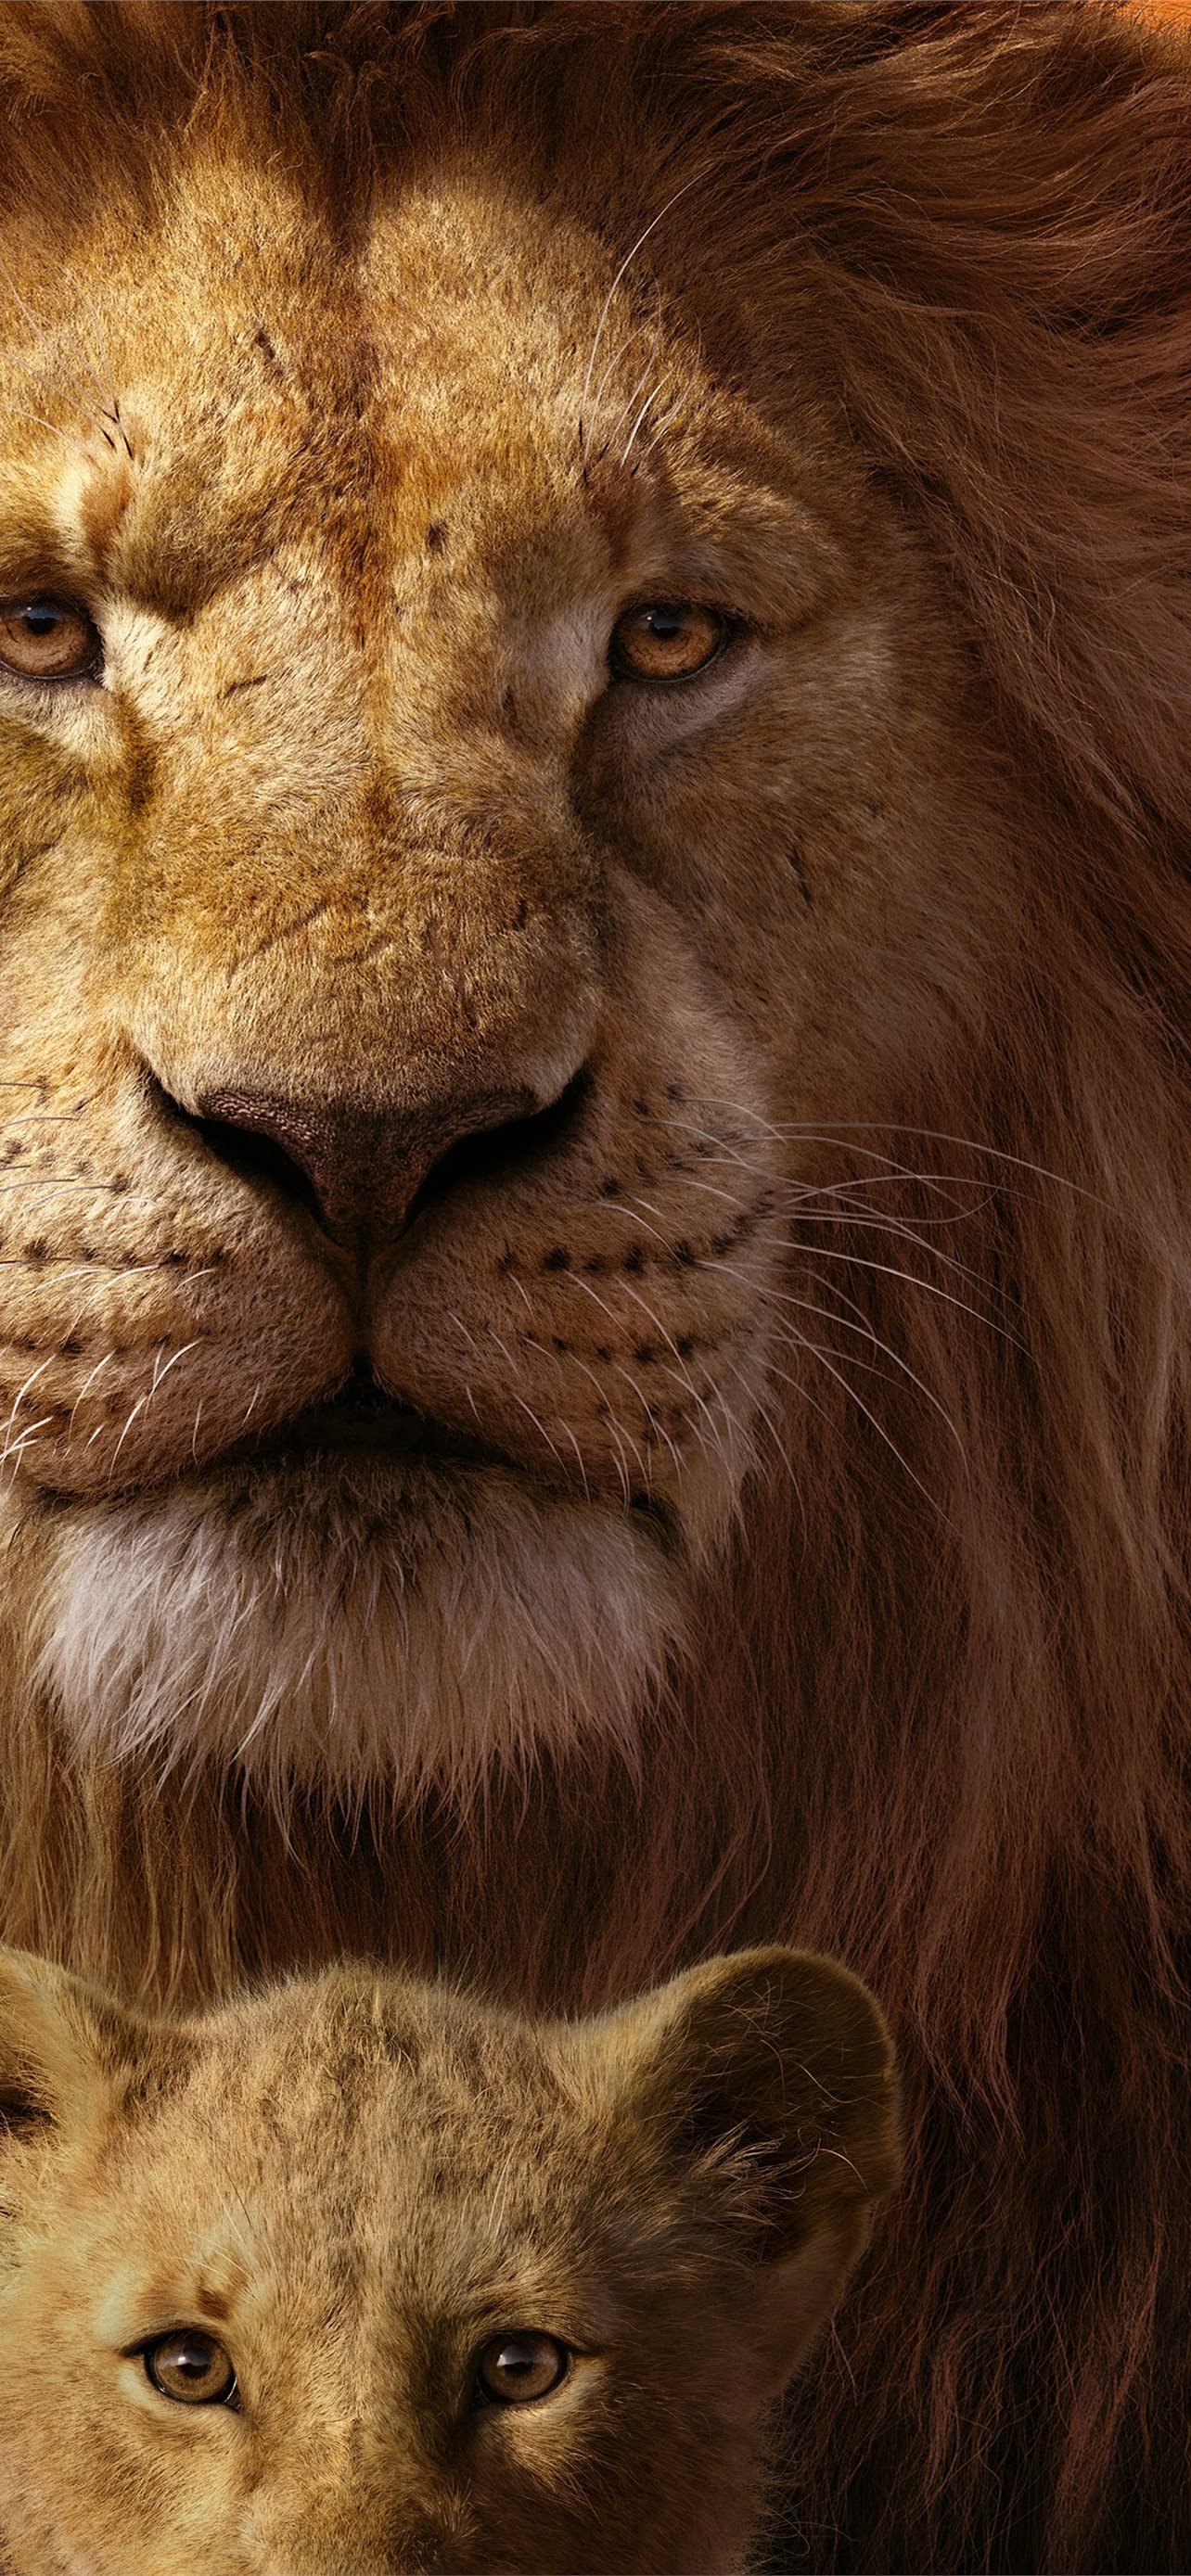 The Lion King Mufasa Simba 8k iPhone